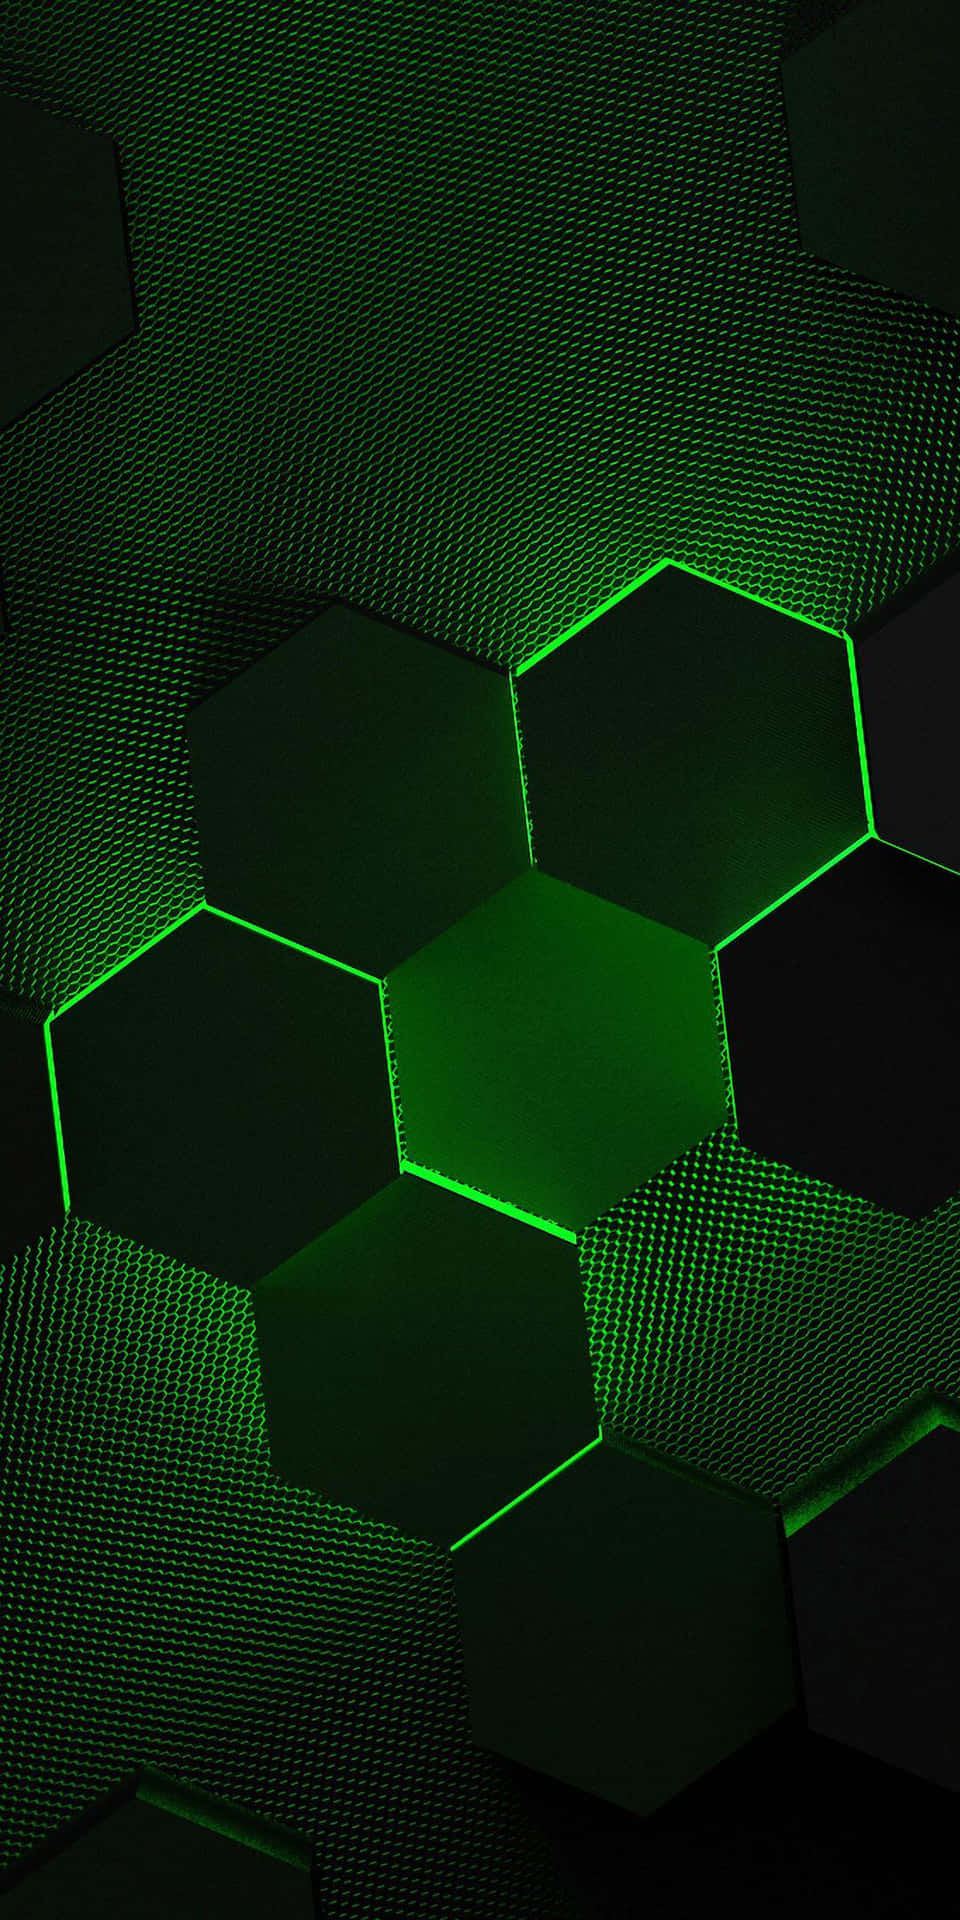 A Green Hexagonal Pattern On A Black Background